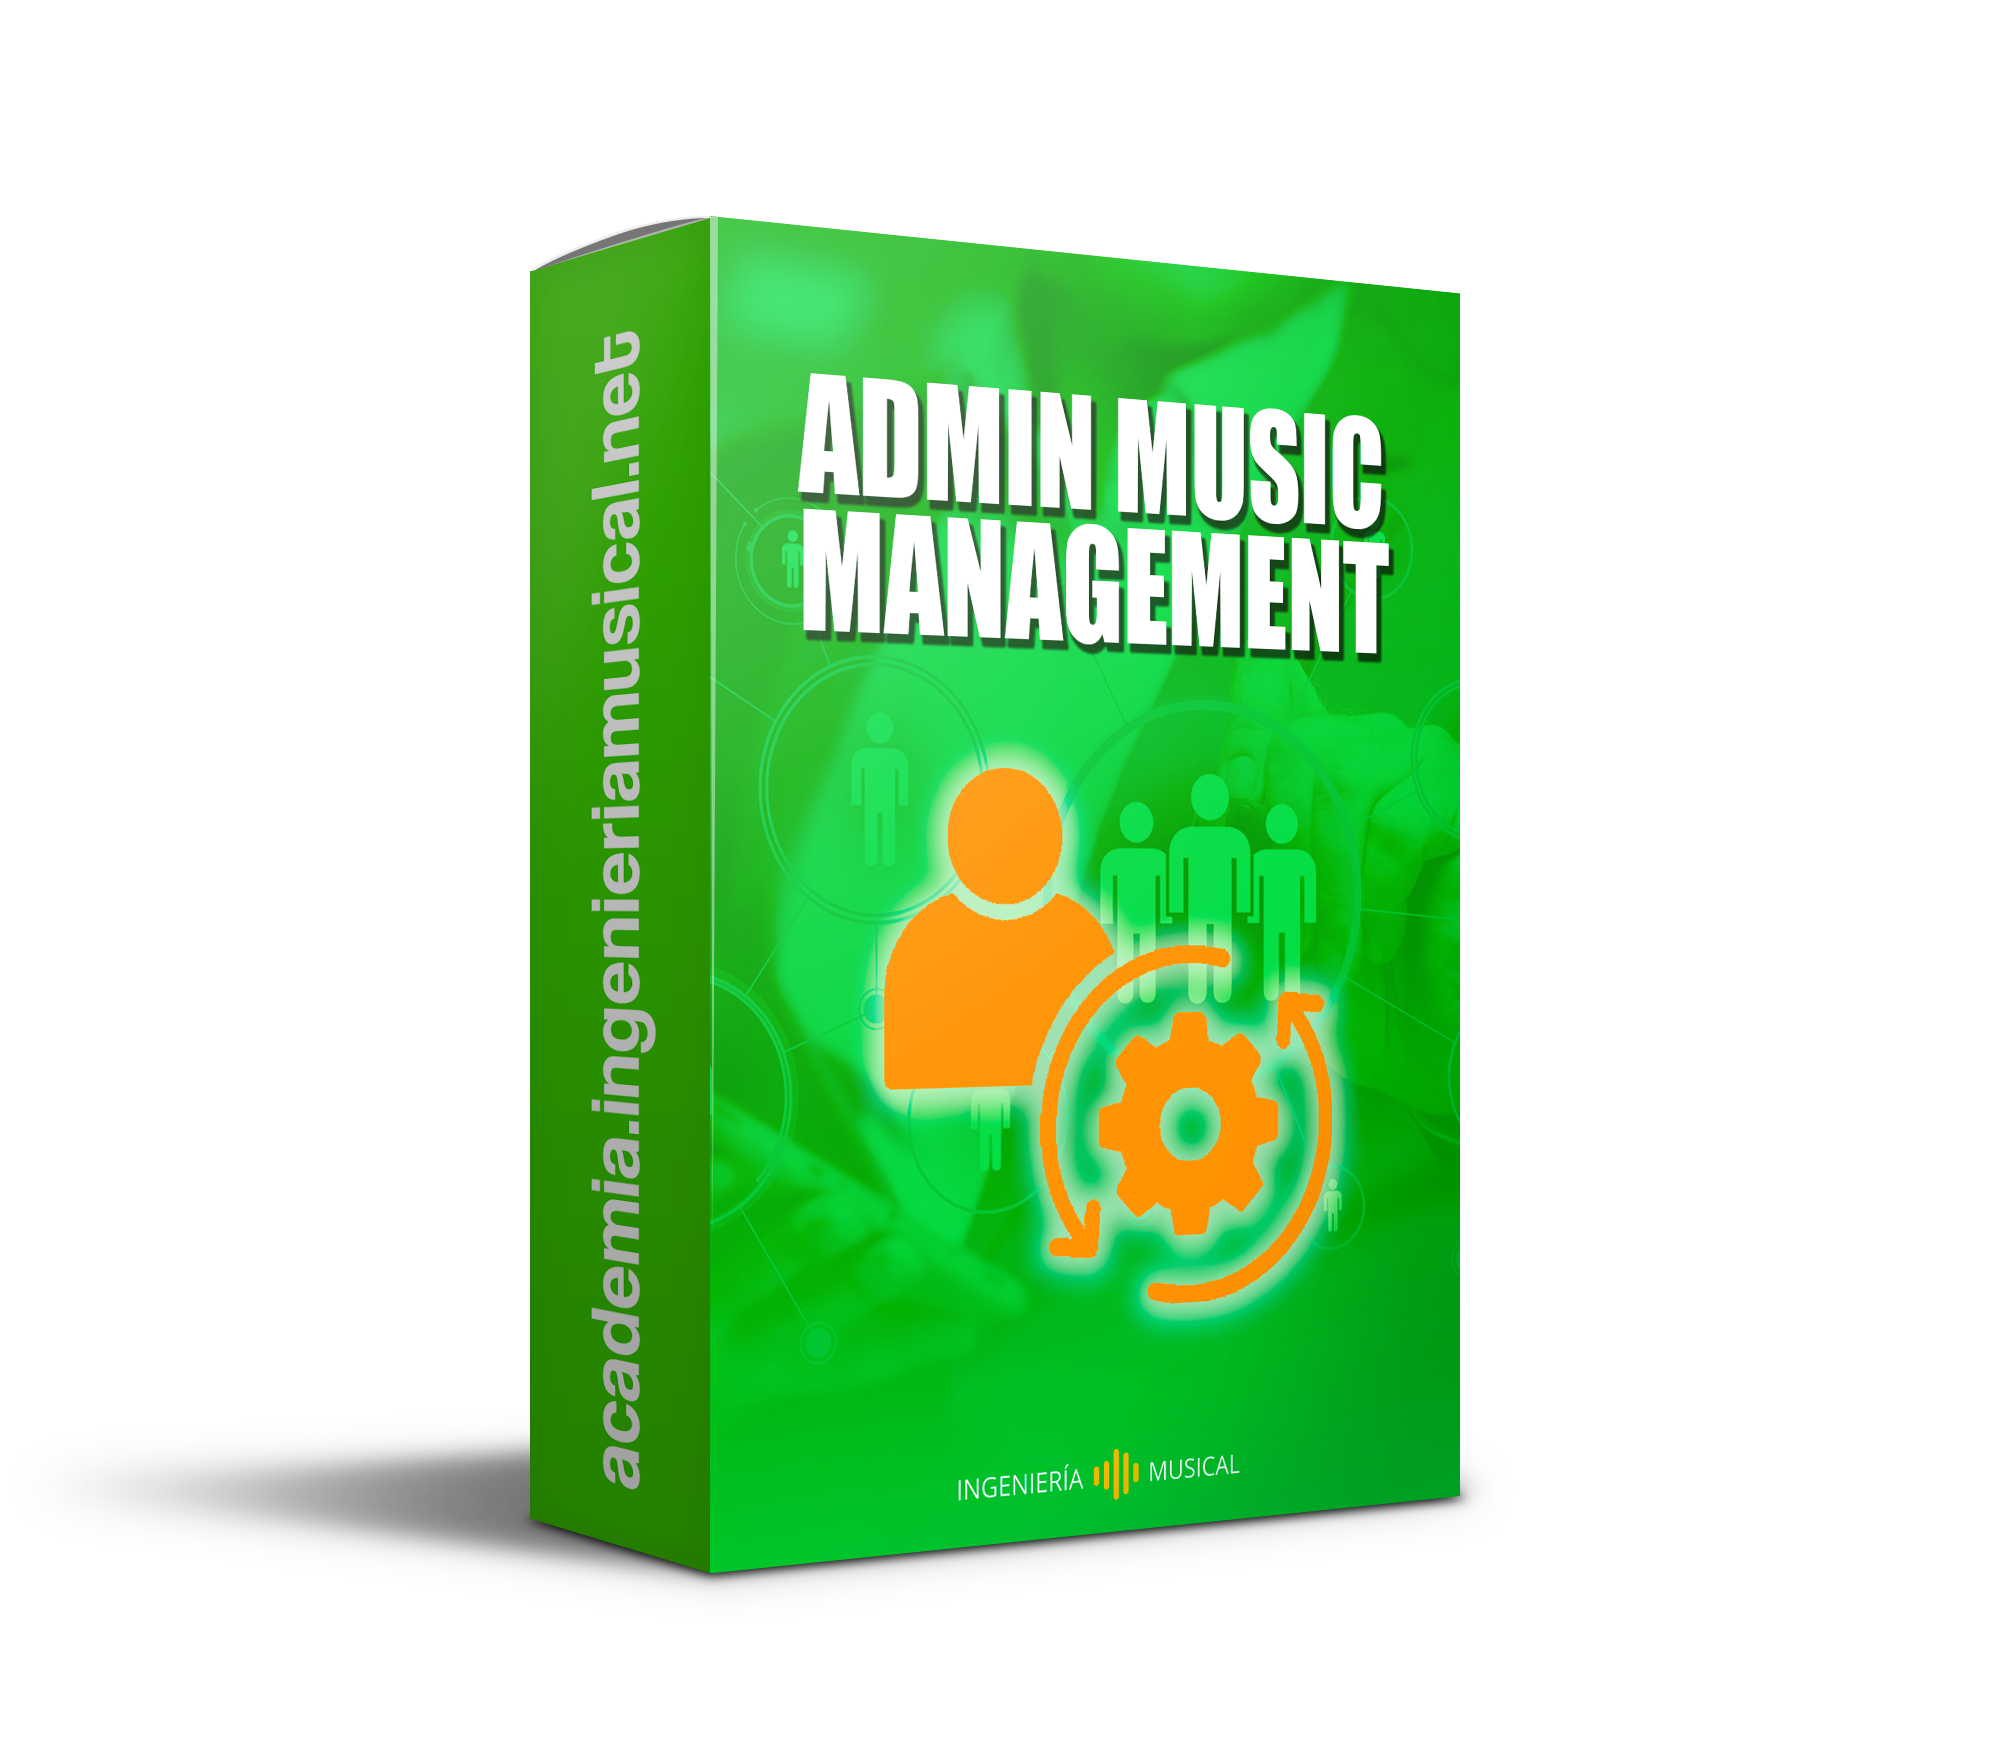 En este momento estás viendo Admin Music Management